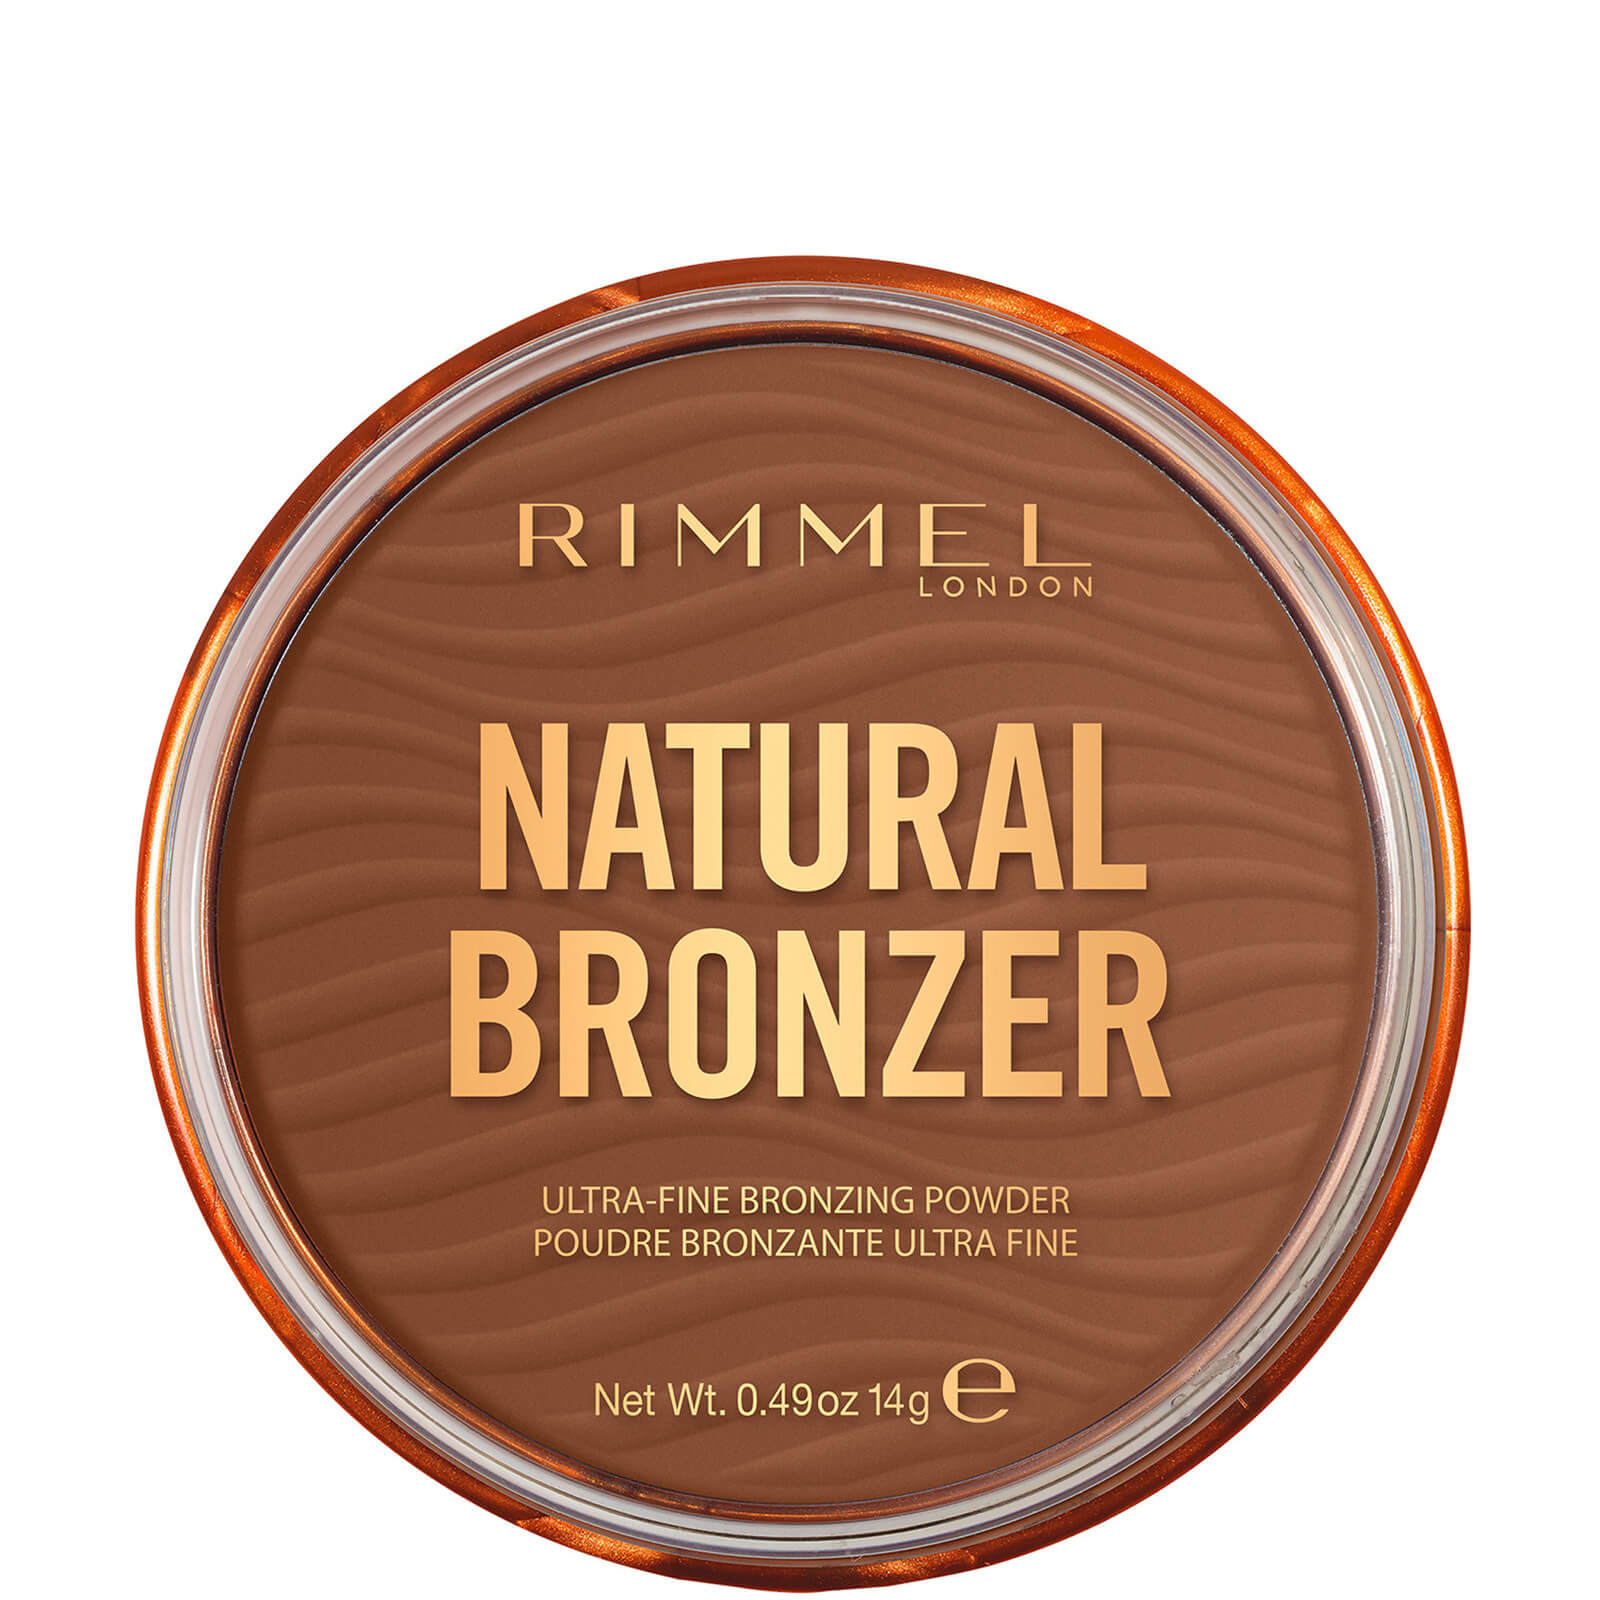 Rimmel Natural Bronzer (Various Shades) - Sunbathe